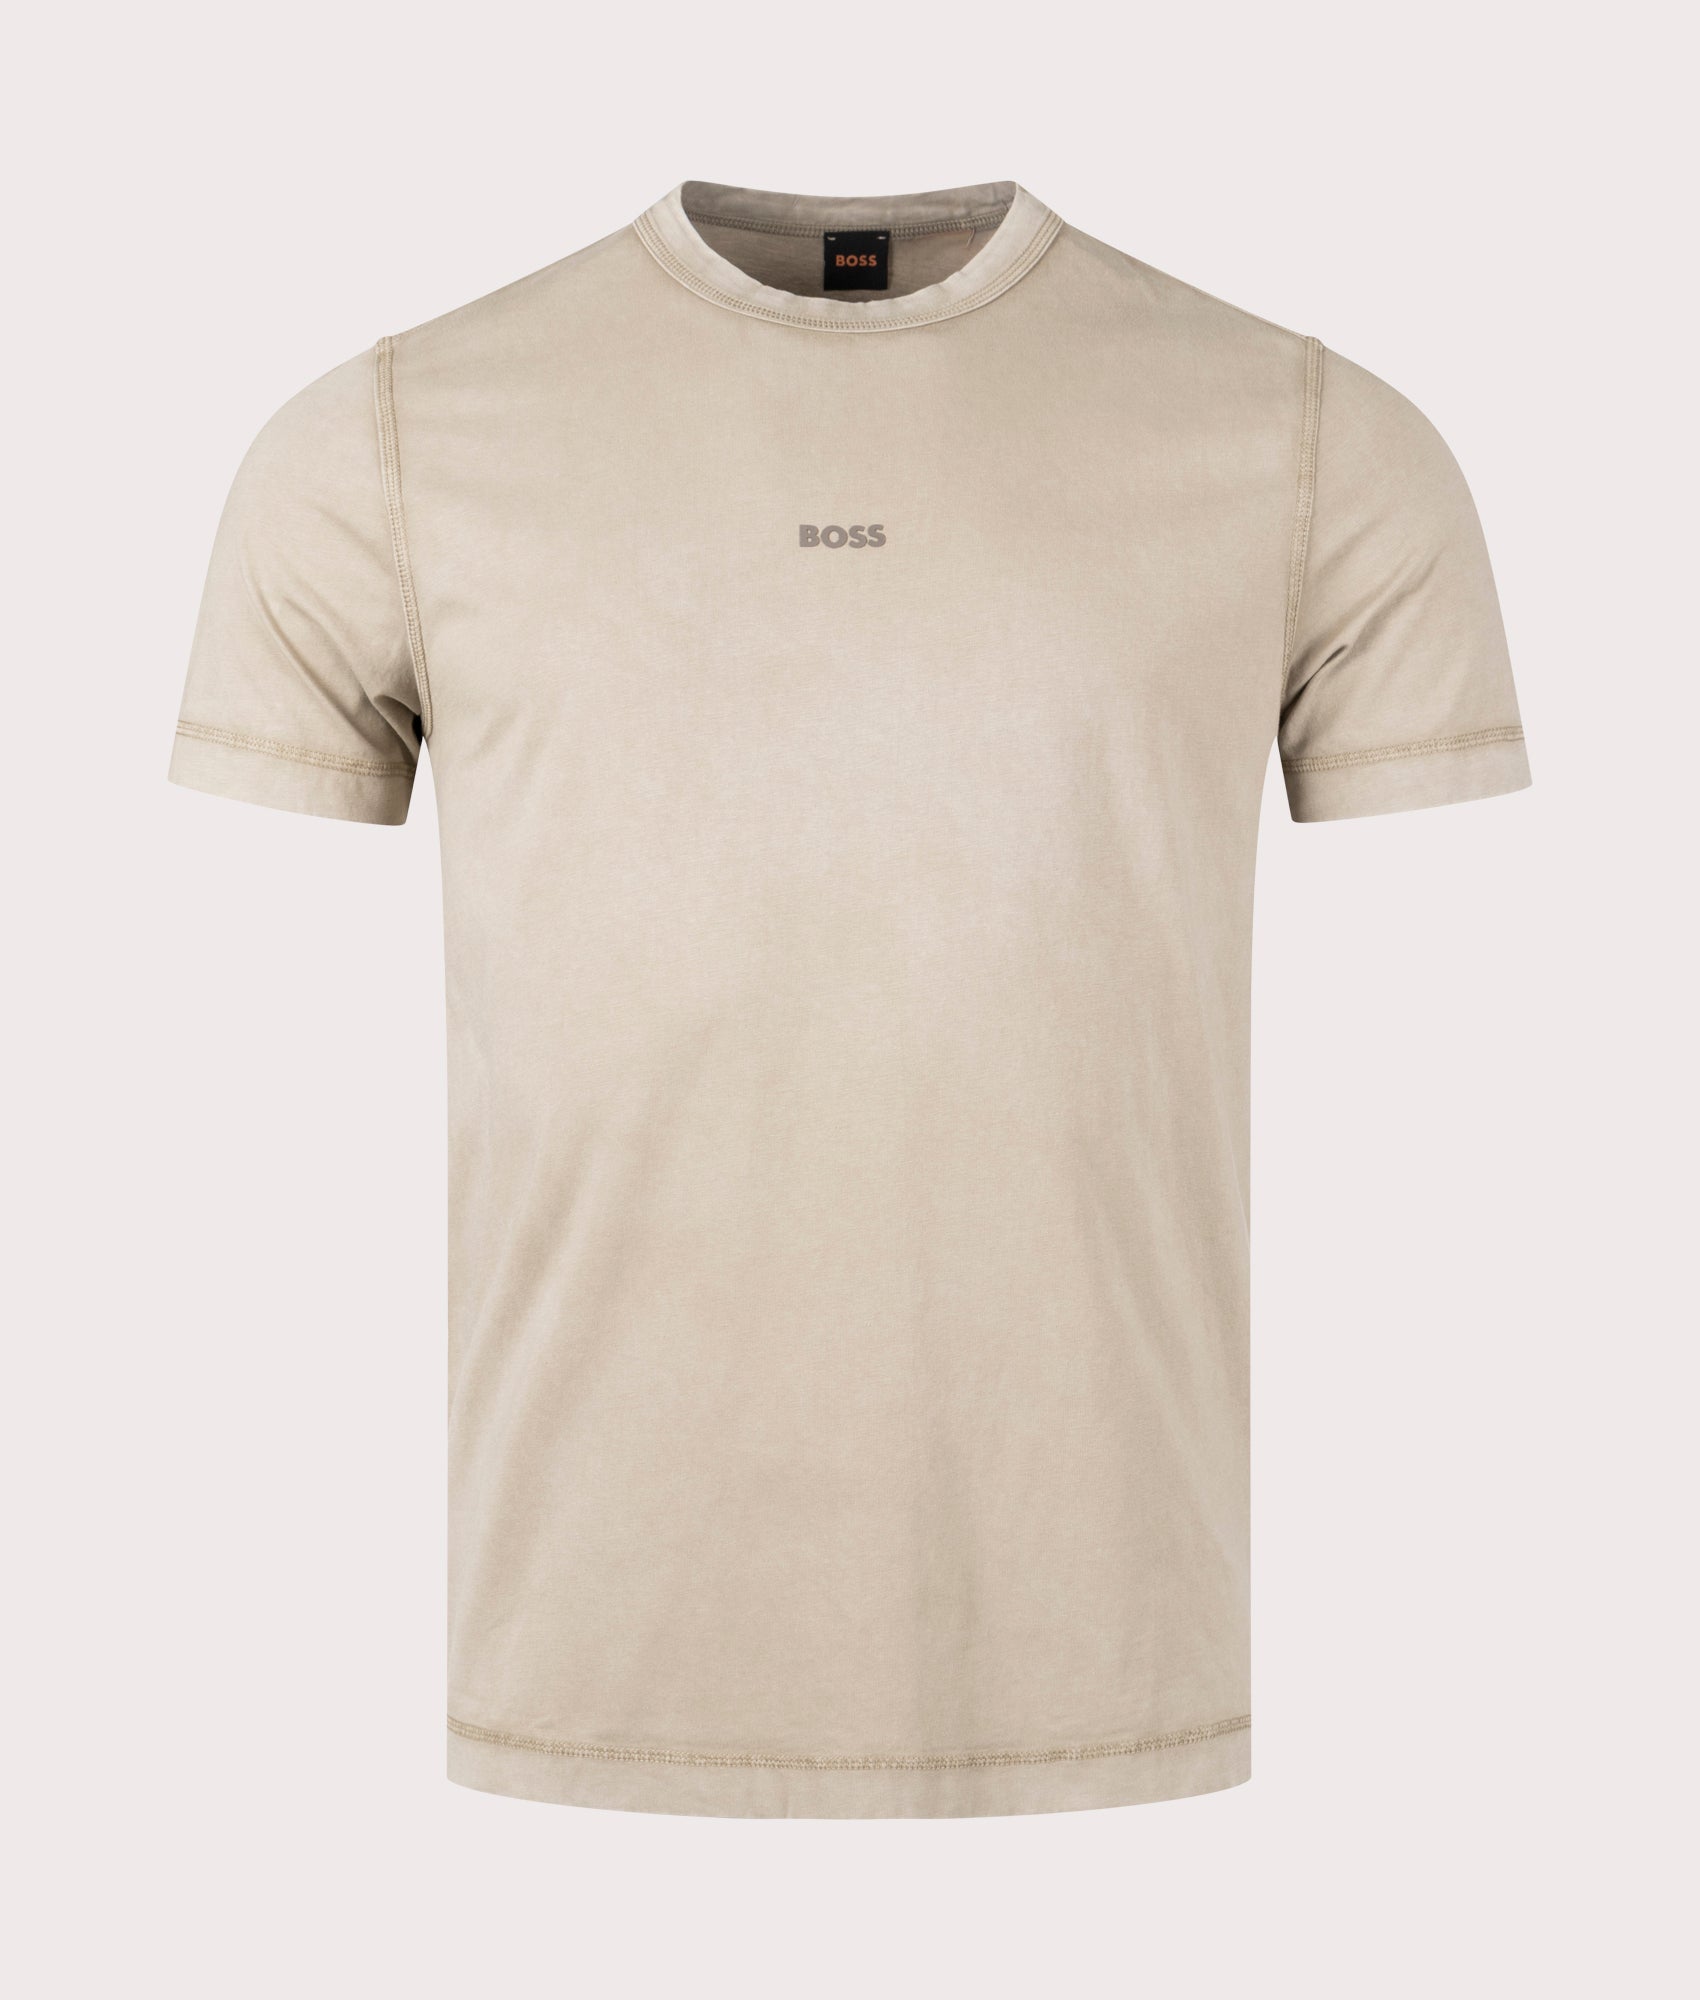 Tokks Medium | BOSS T-Shirt Beige | EQVVS